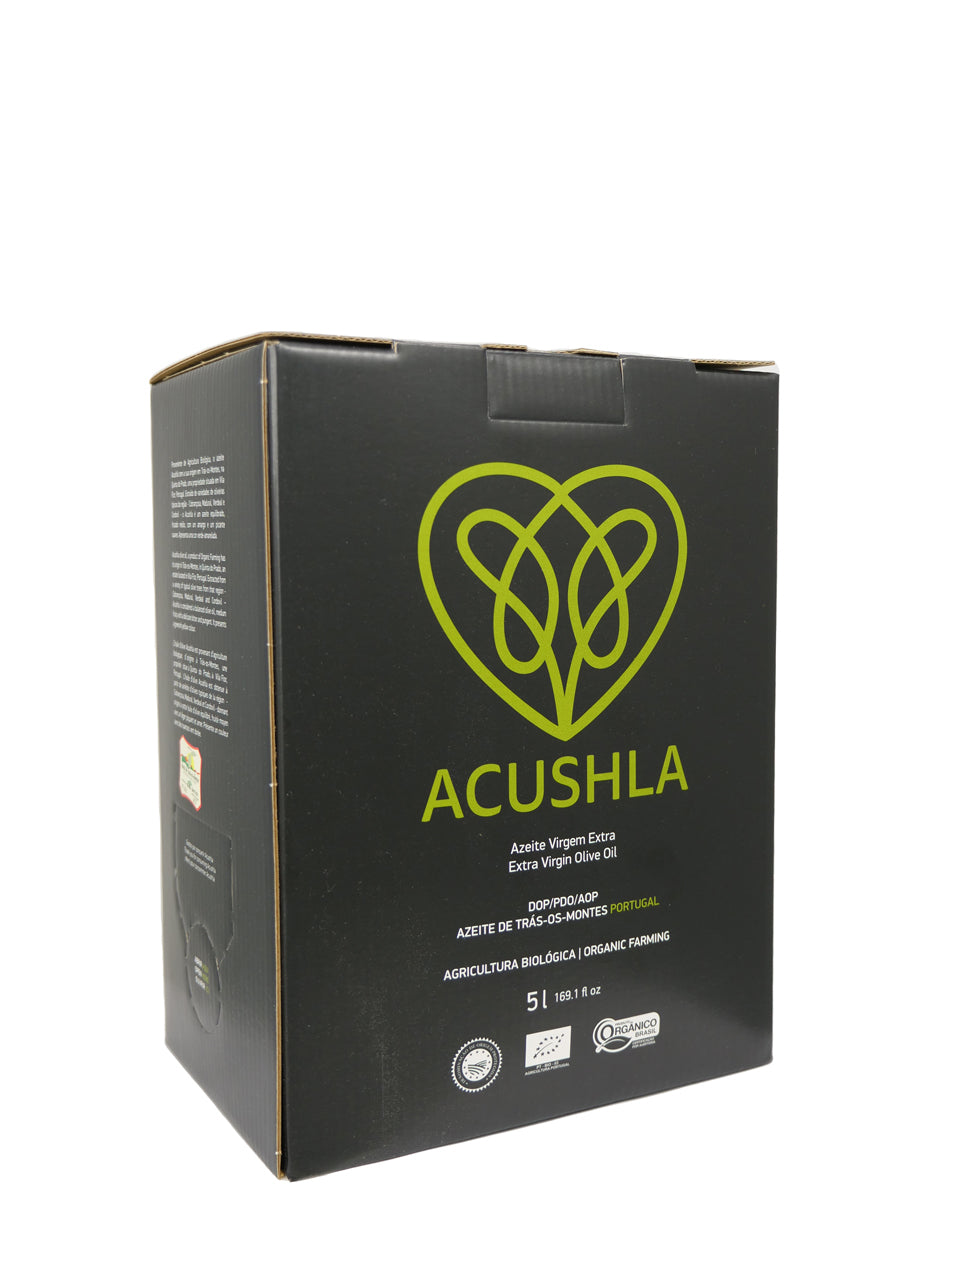 Acushla Organic DOP Trás-os-Montes 5L Bag in Box